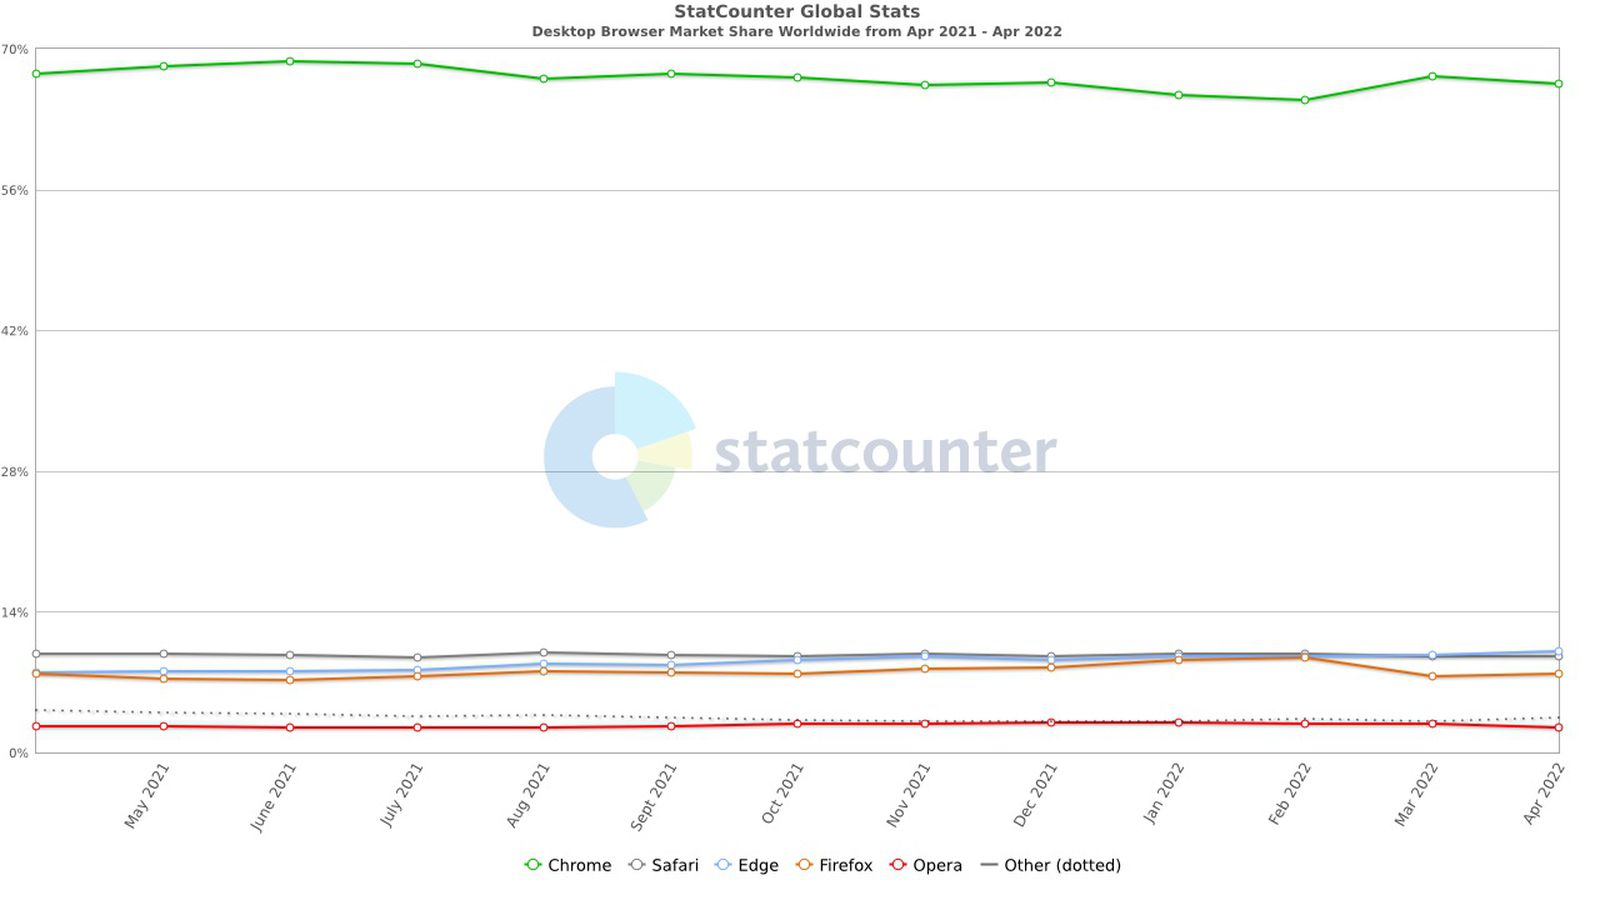 Microsoft Edge is now the world's second most popular desktop browser, surpassing Safari